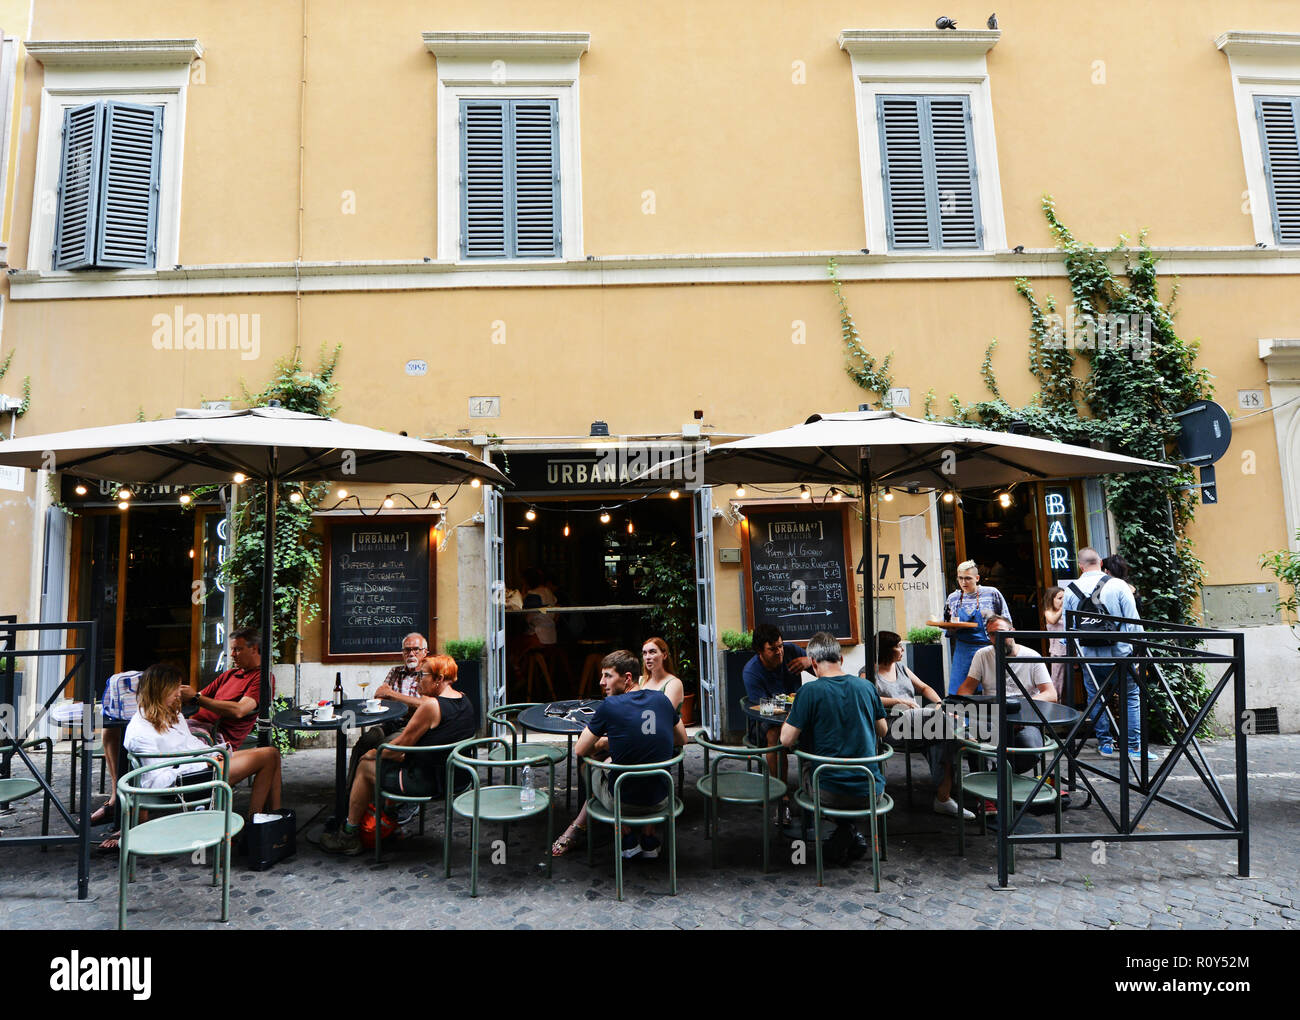 Der lebhaften Via Urbana in Monti, Rom. Stockfoto